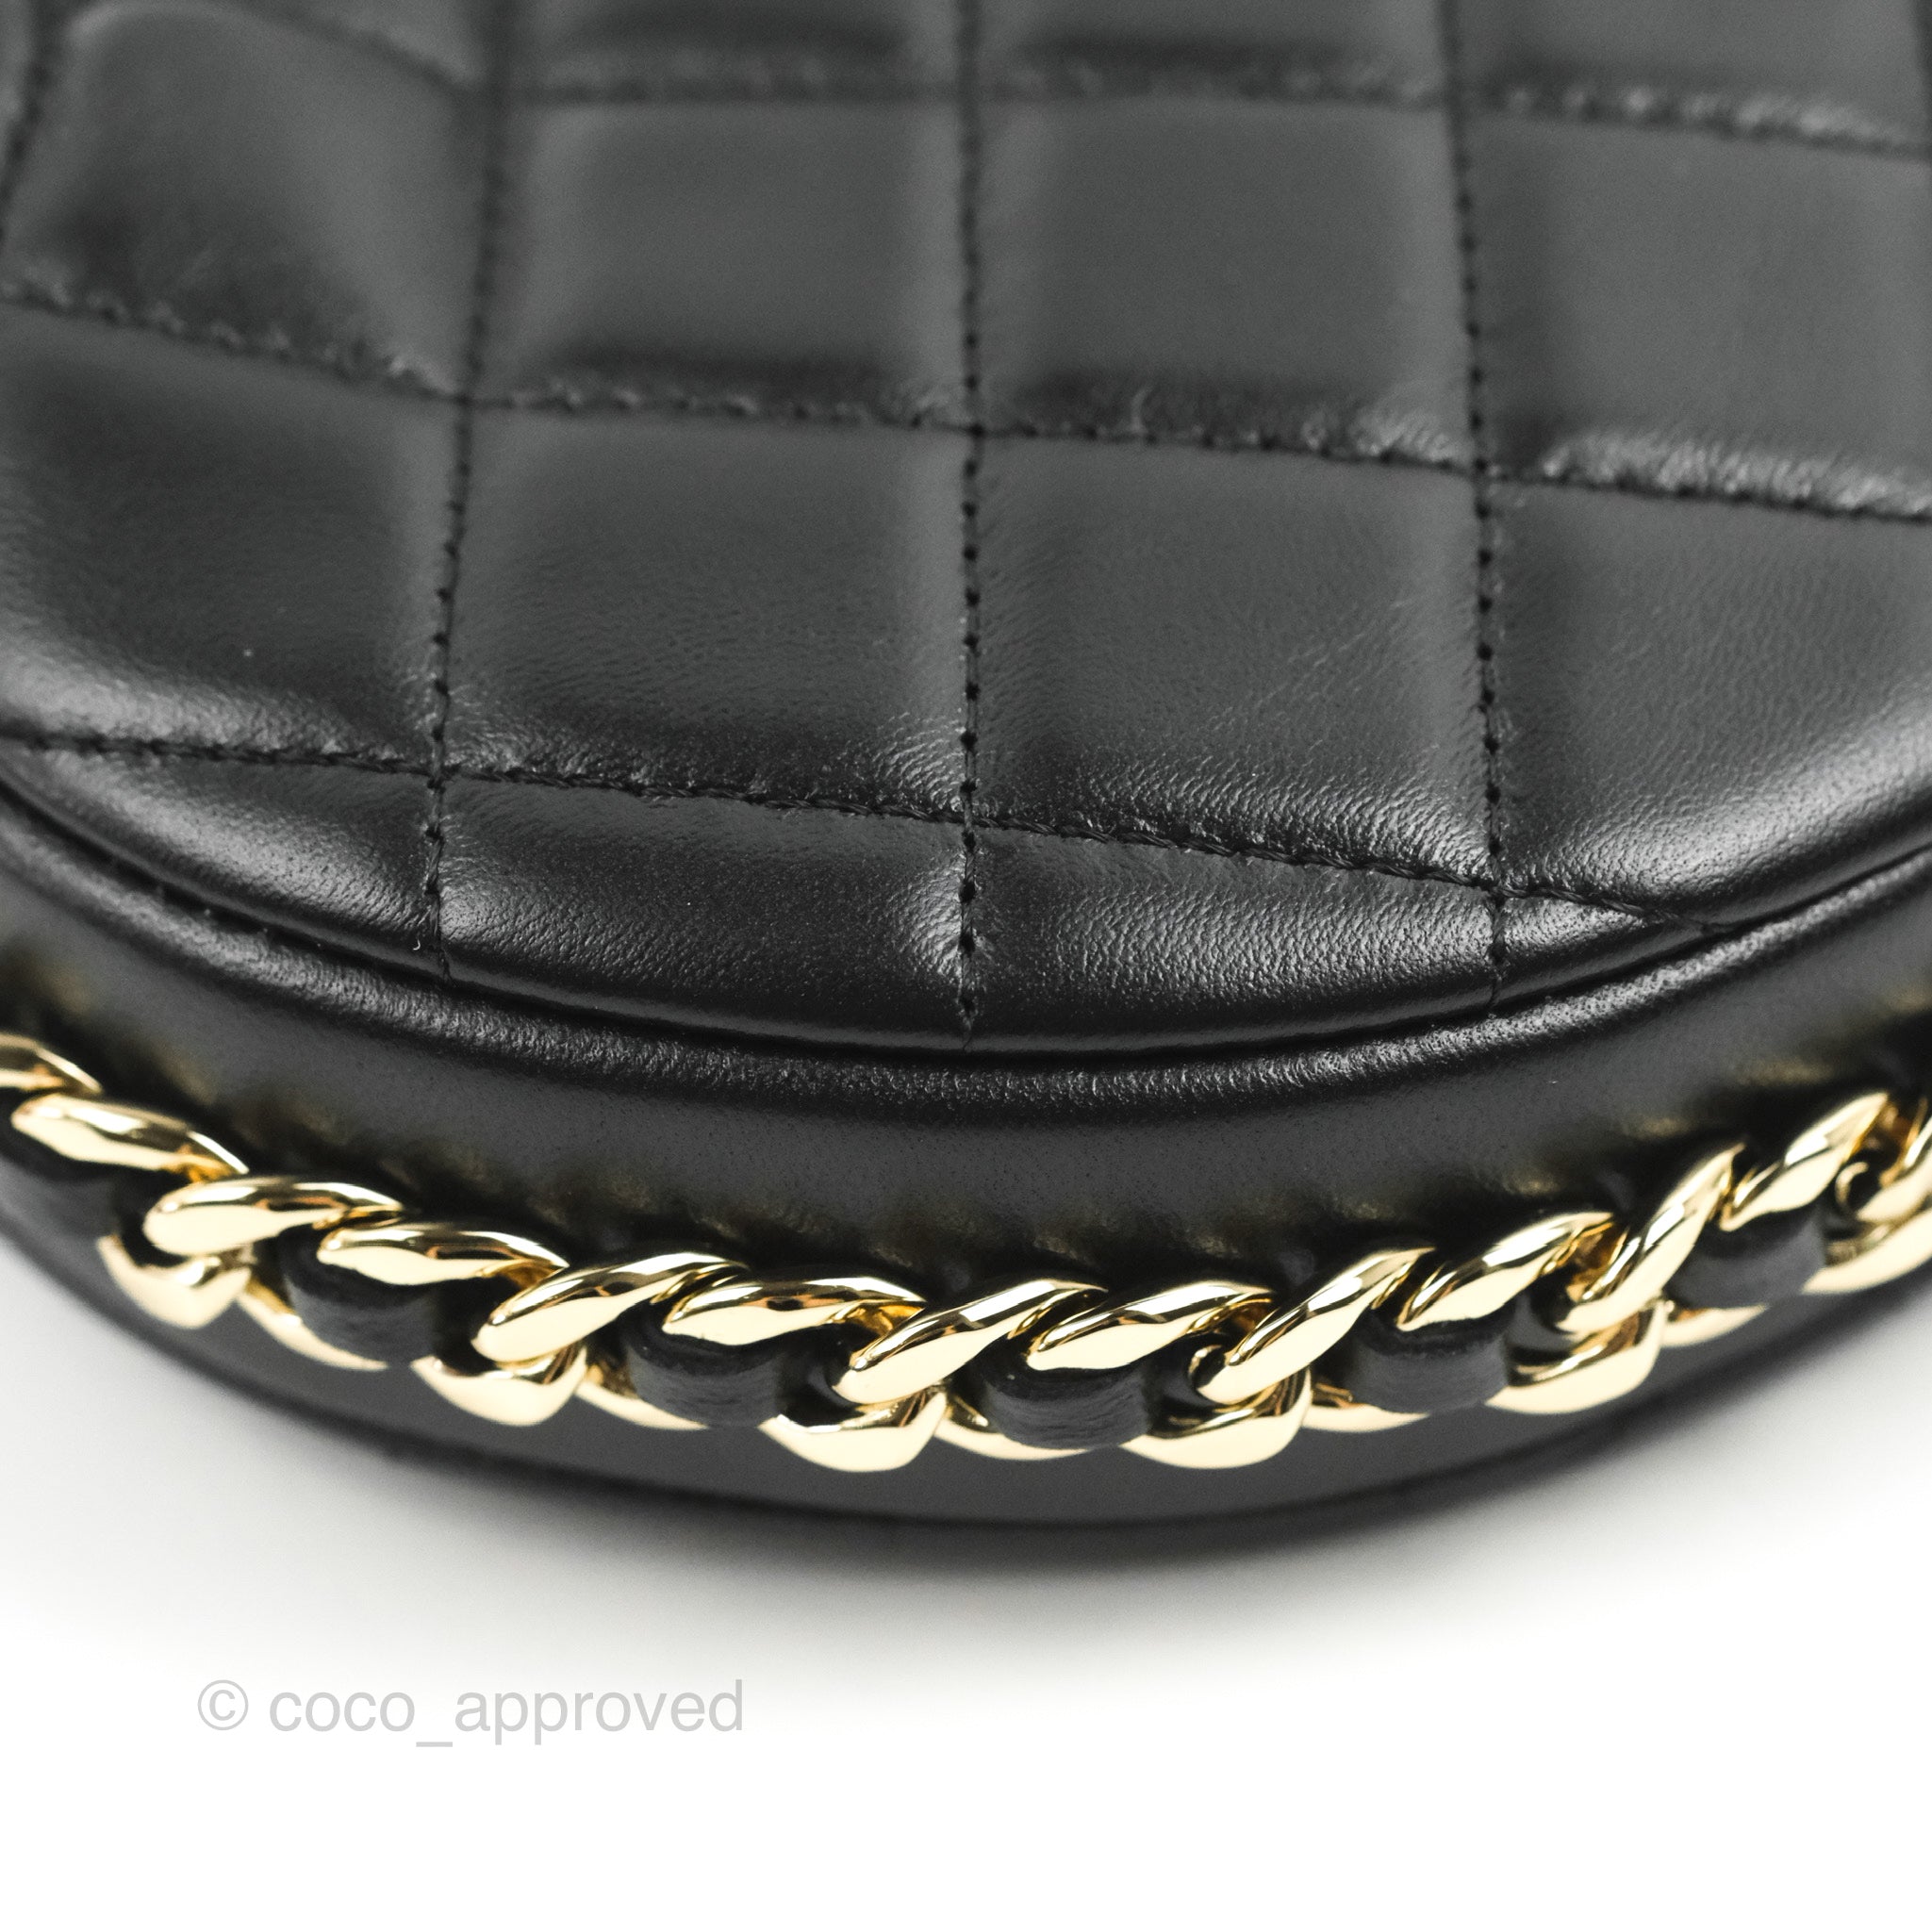 CHANEL VINTAGE RARE Black Quilted Leather Double Chain Strap Shoulder Bag  $570.00 - PicClick